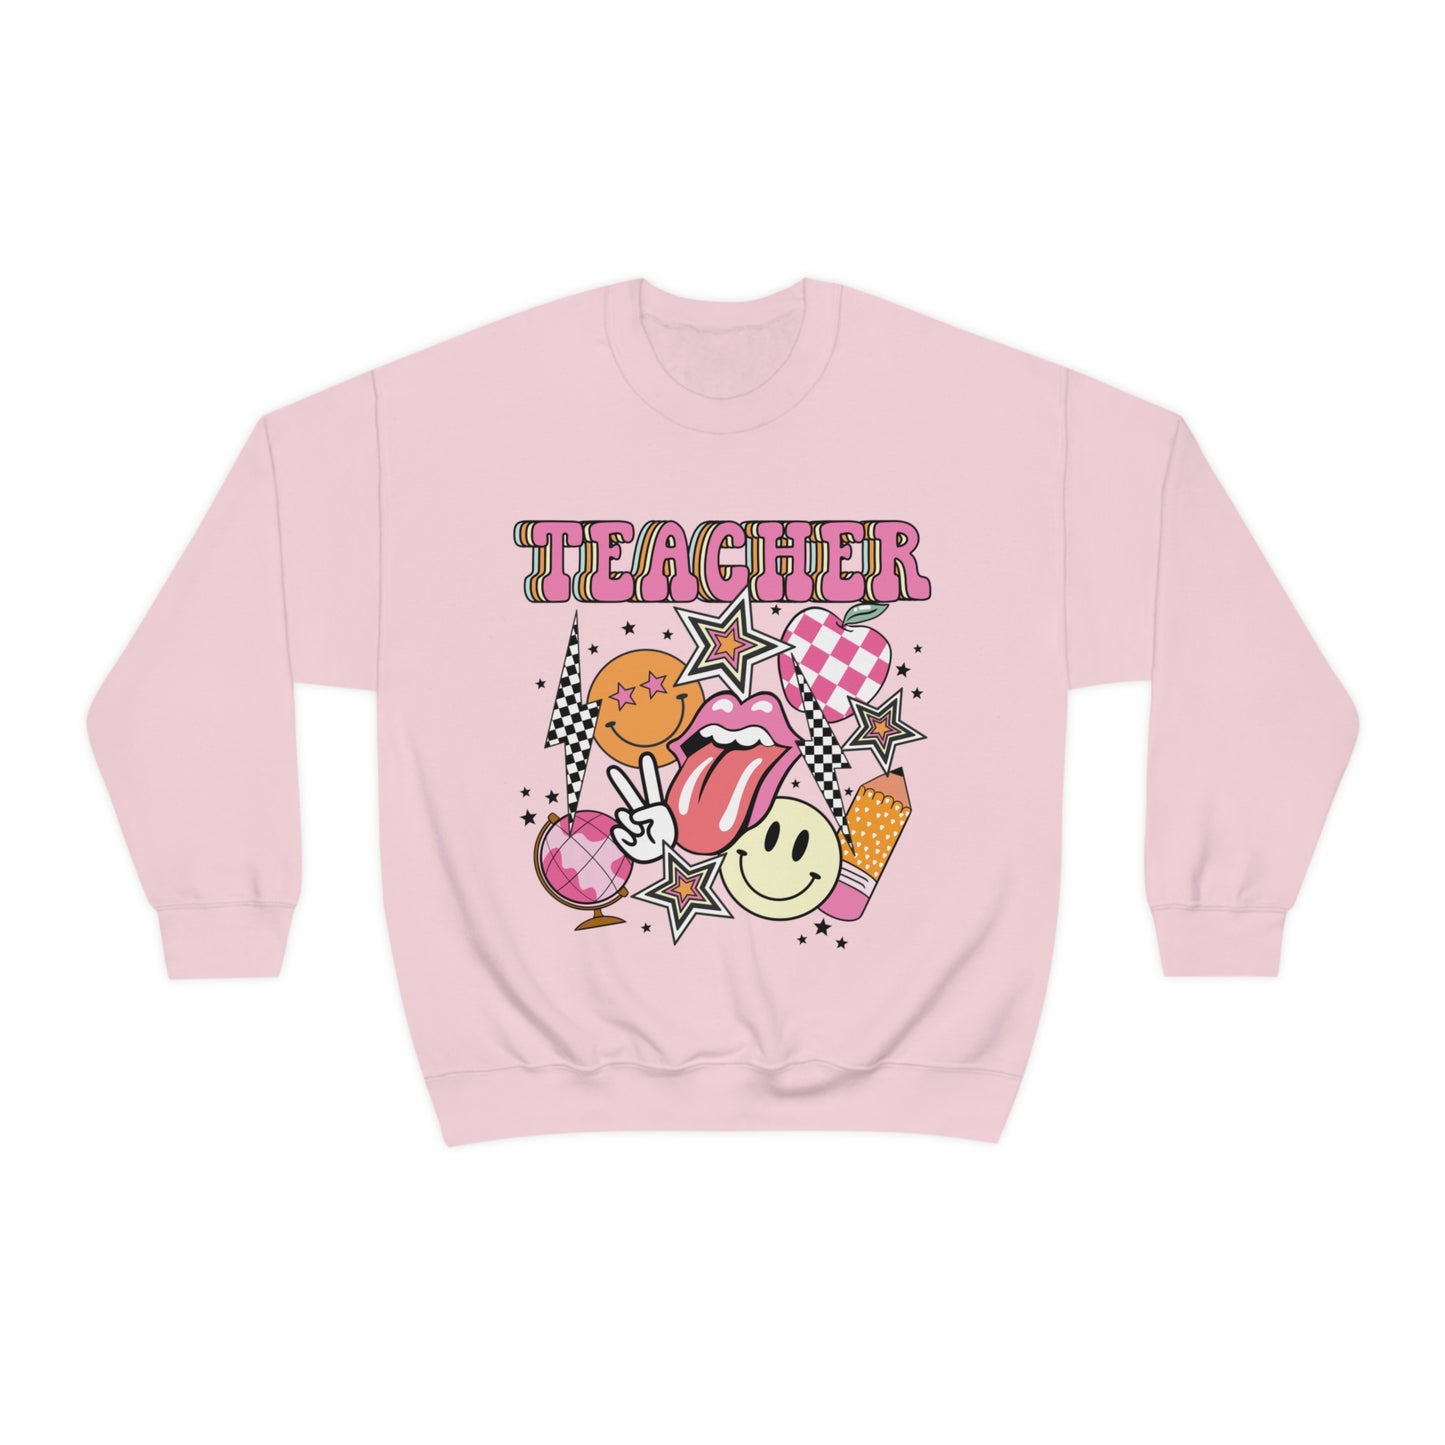 Retro Teacher Crewneck Sweatshirt